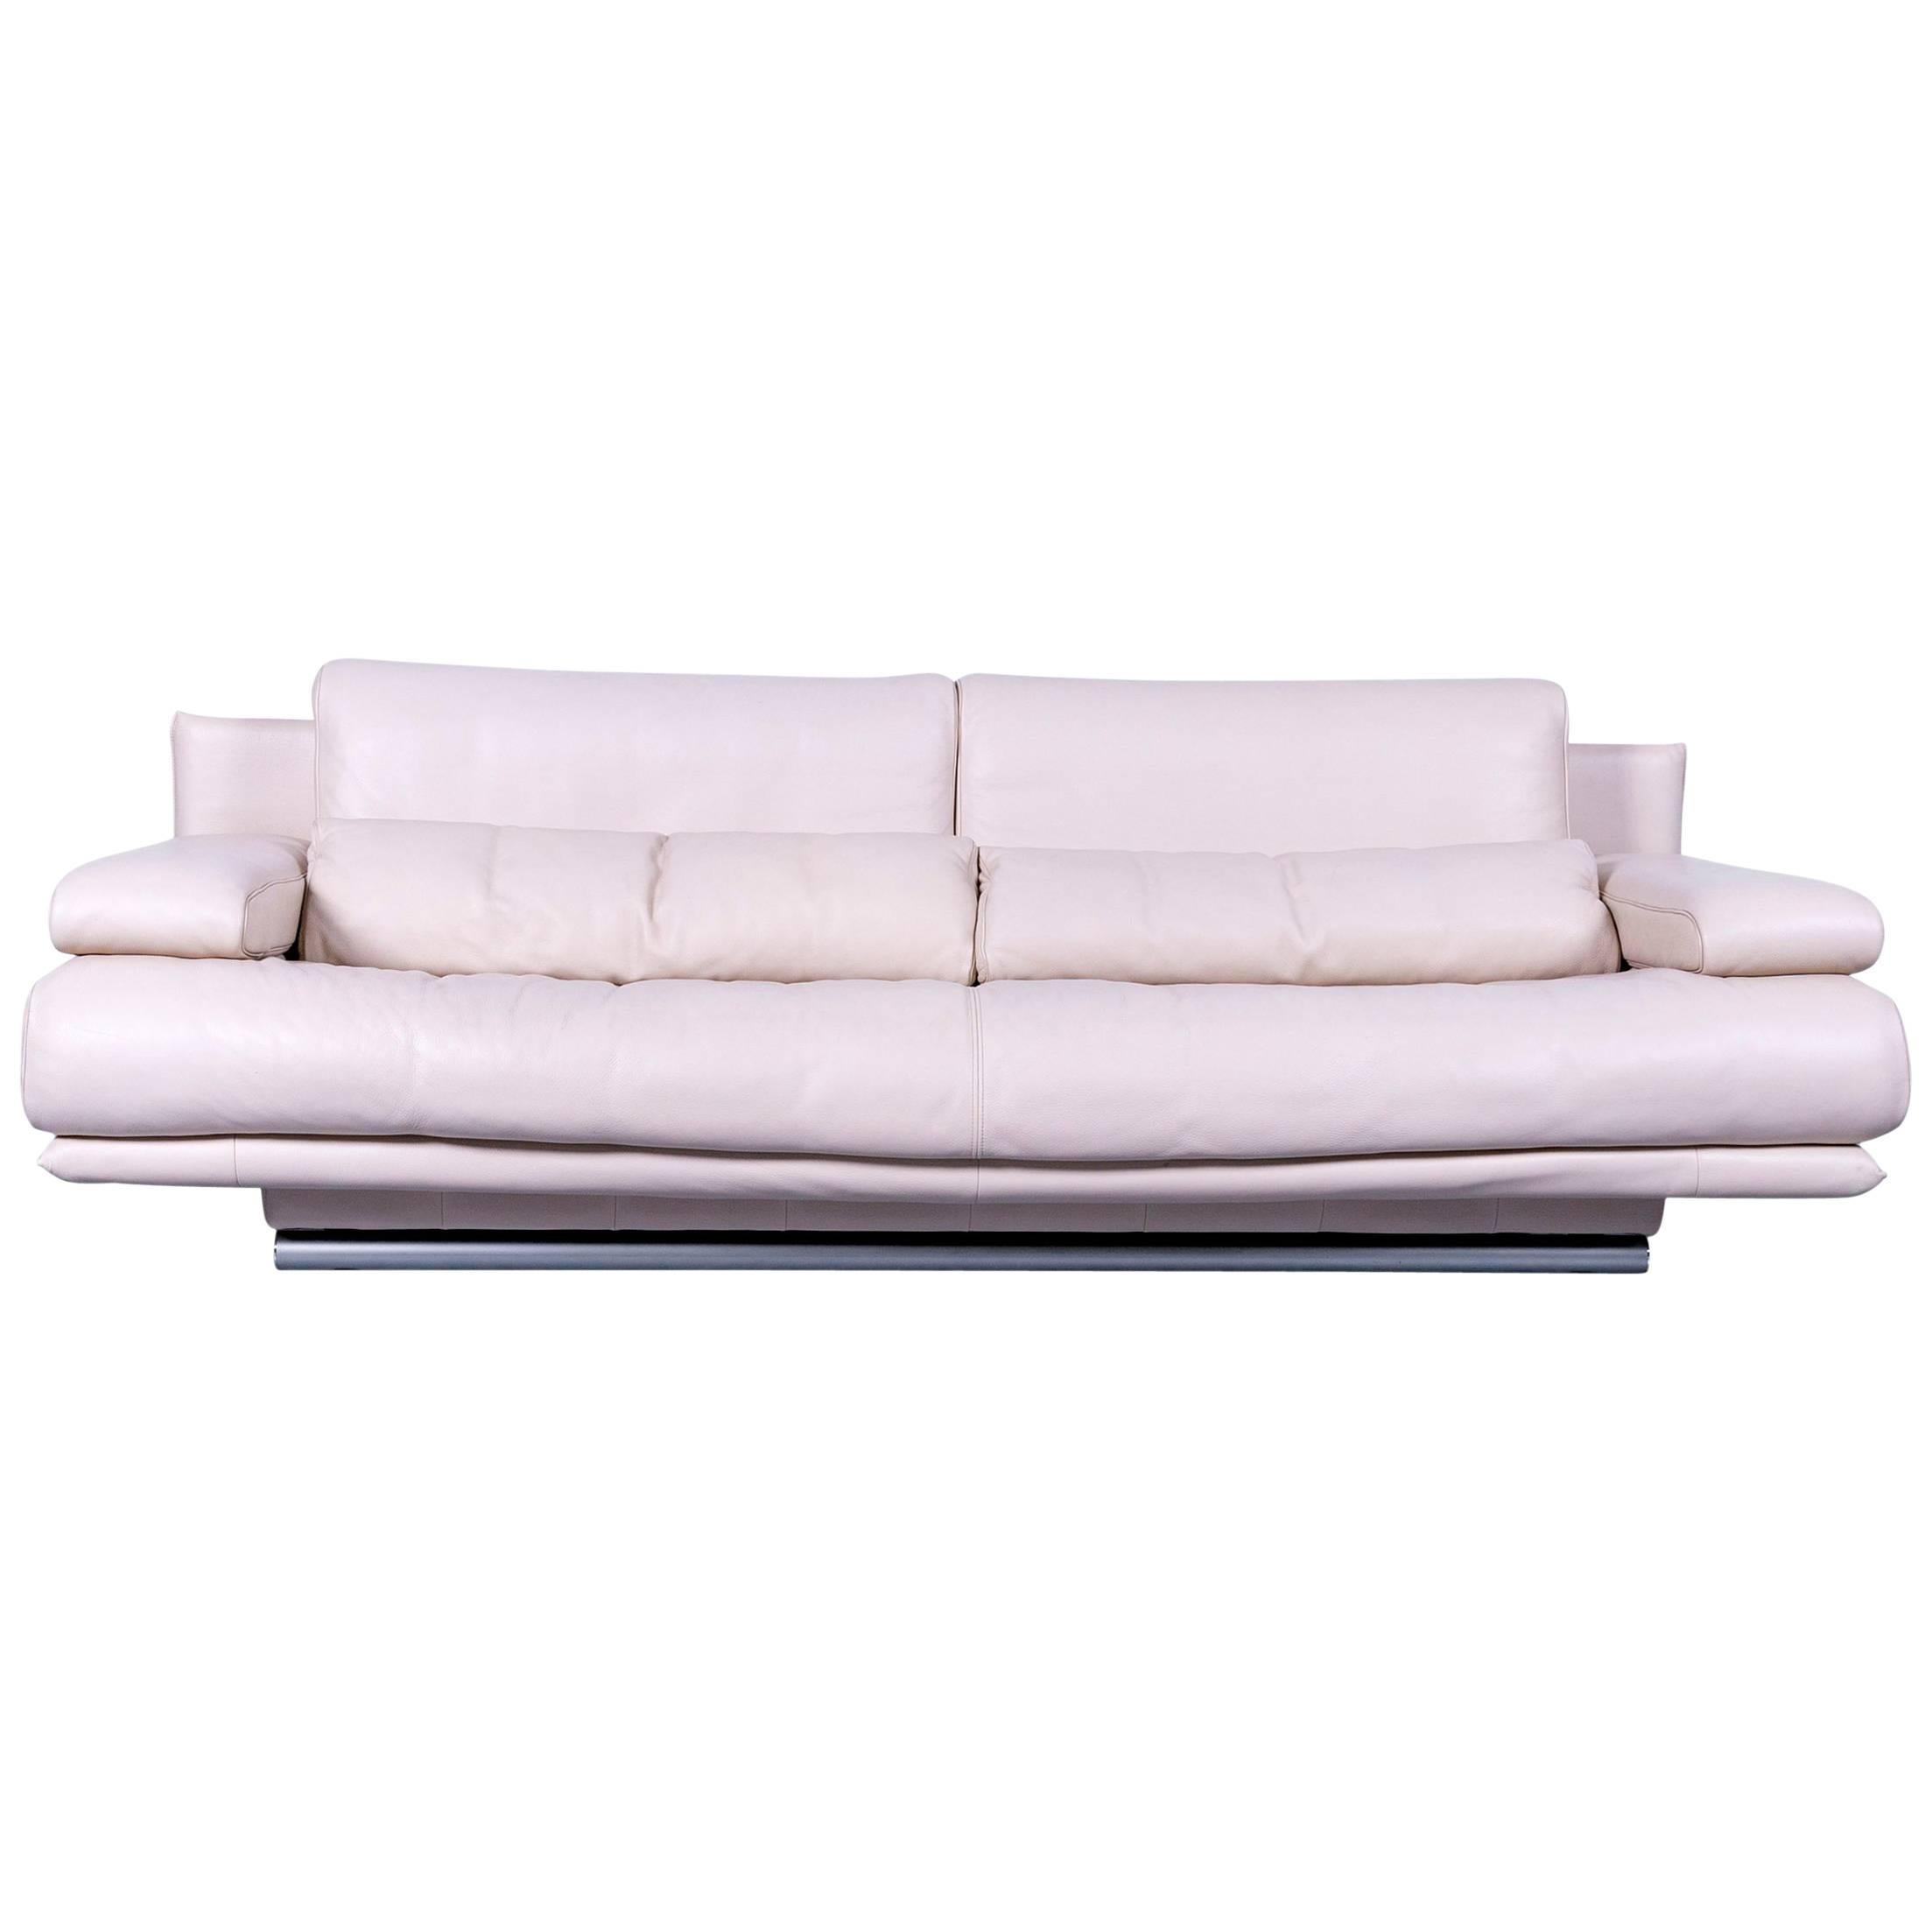 Rolf Benz 6500 Designer Sofa, Off-White Leather Three-Seat, Modern